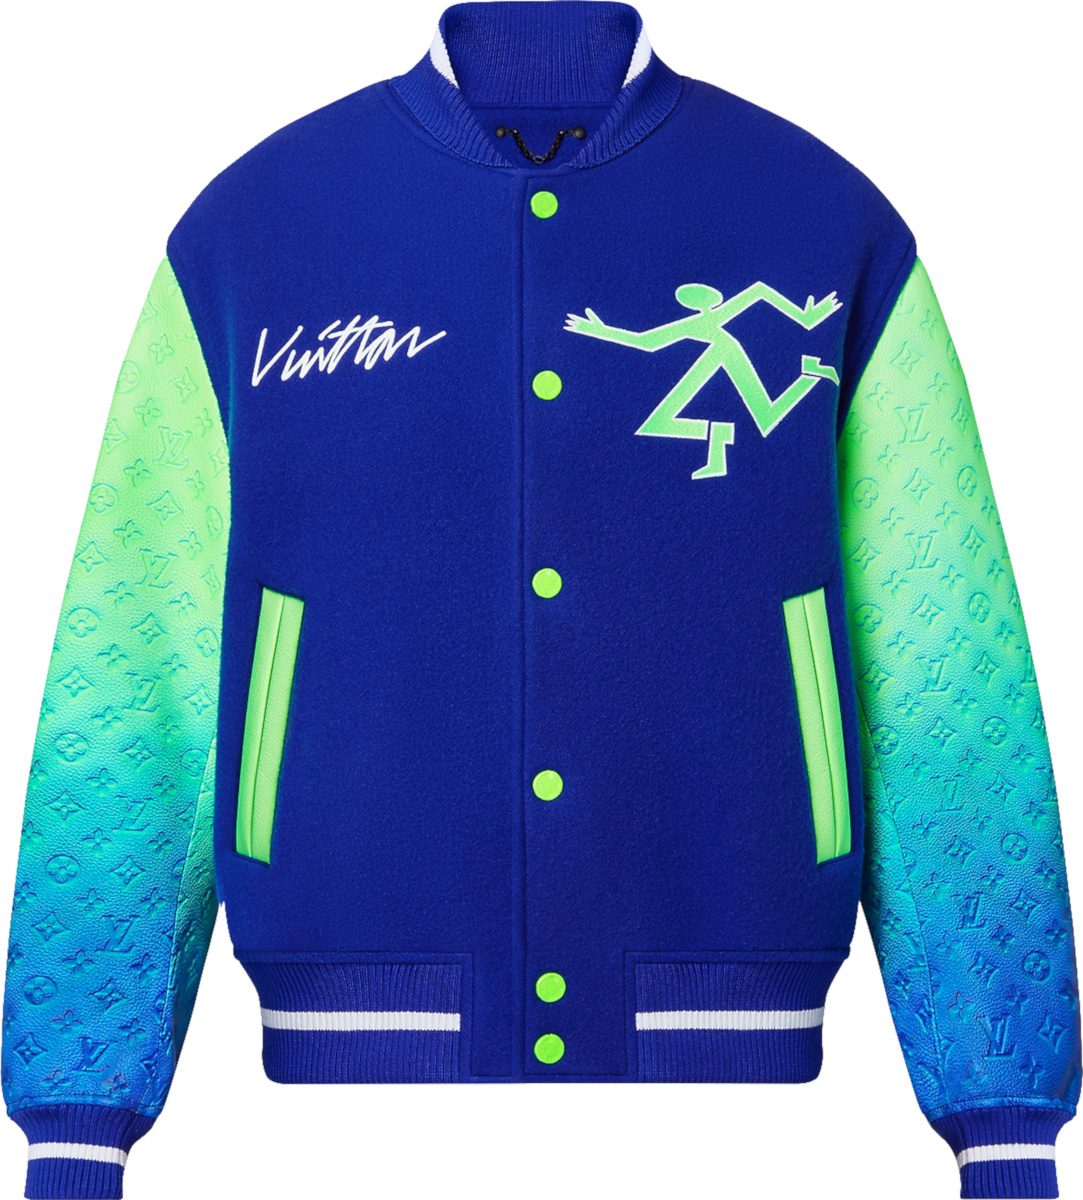 Louis Vuitton Blue & Neon Green Gradient Varsity Jacket | Incorporated Style